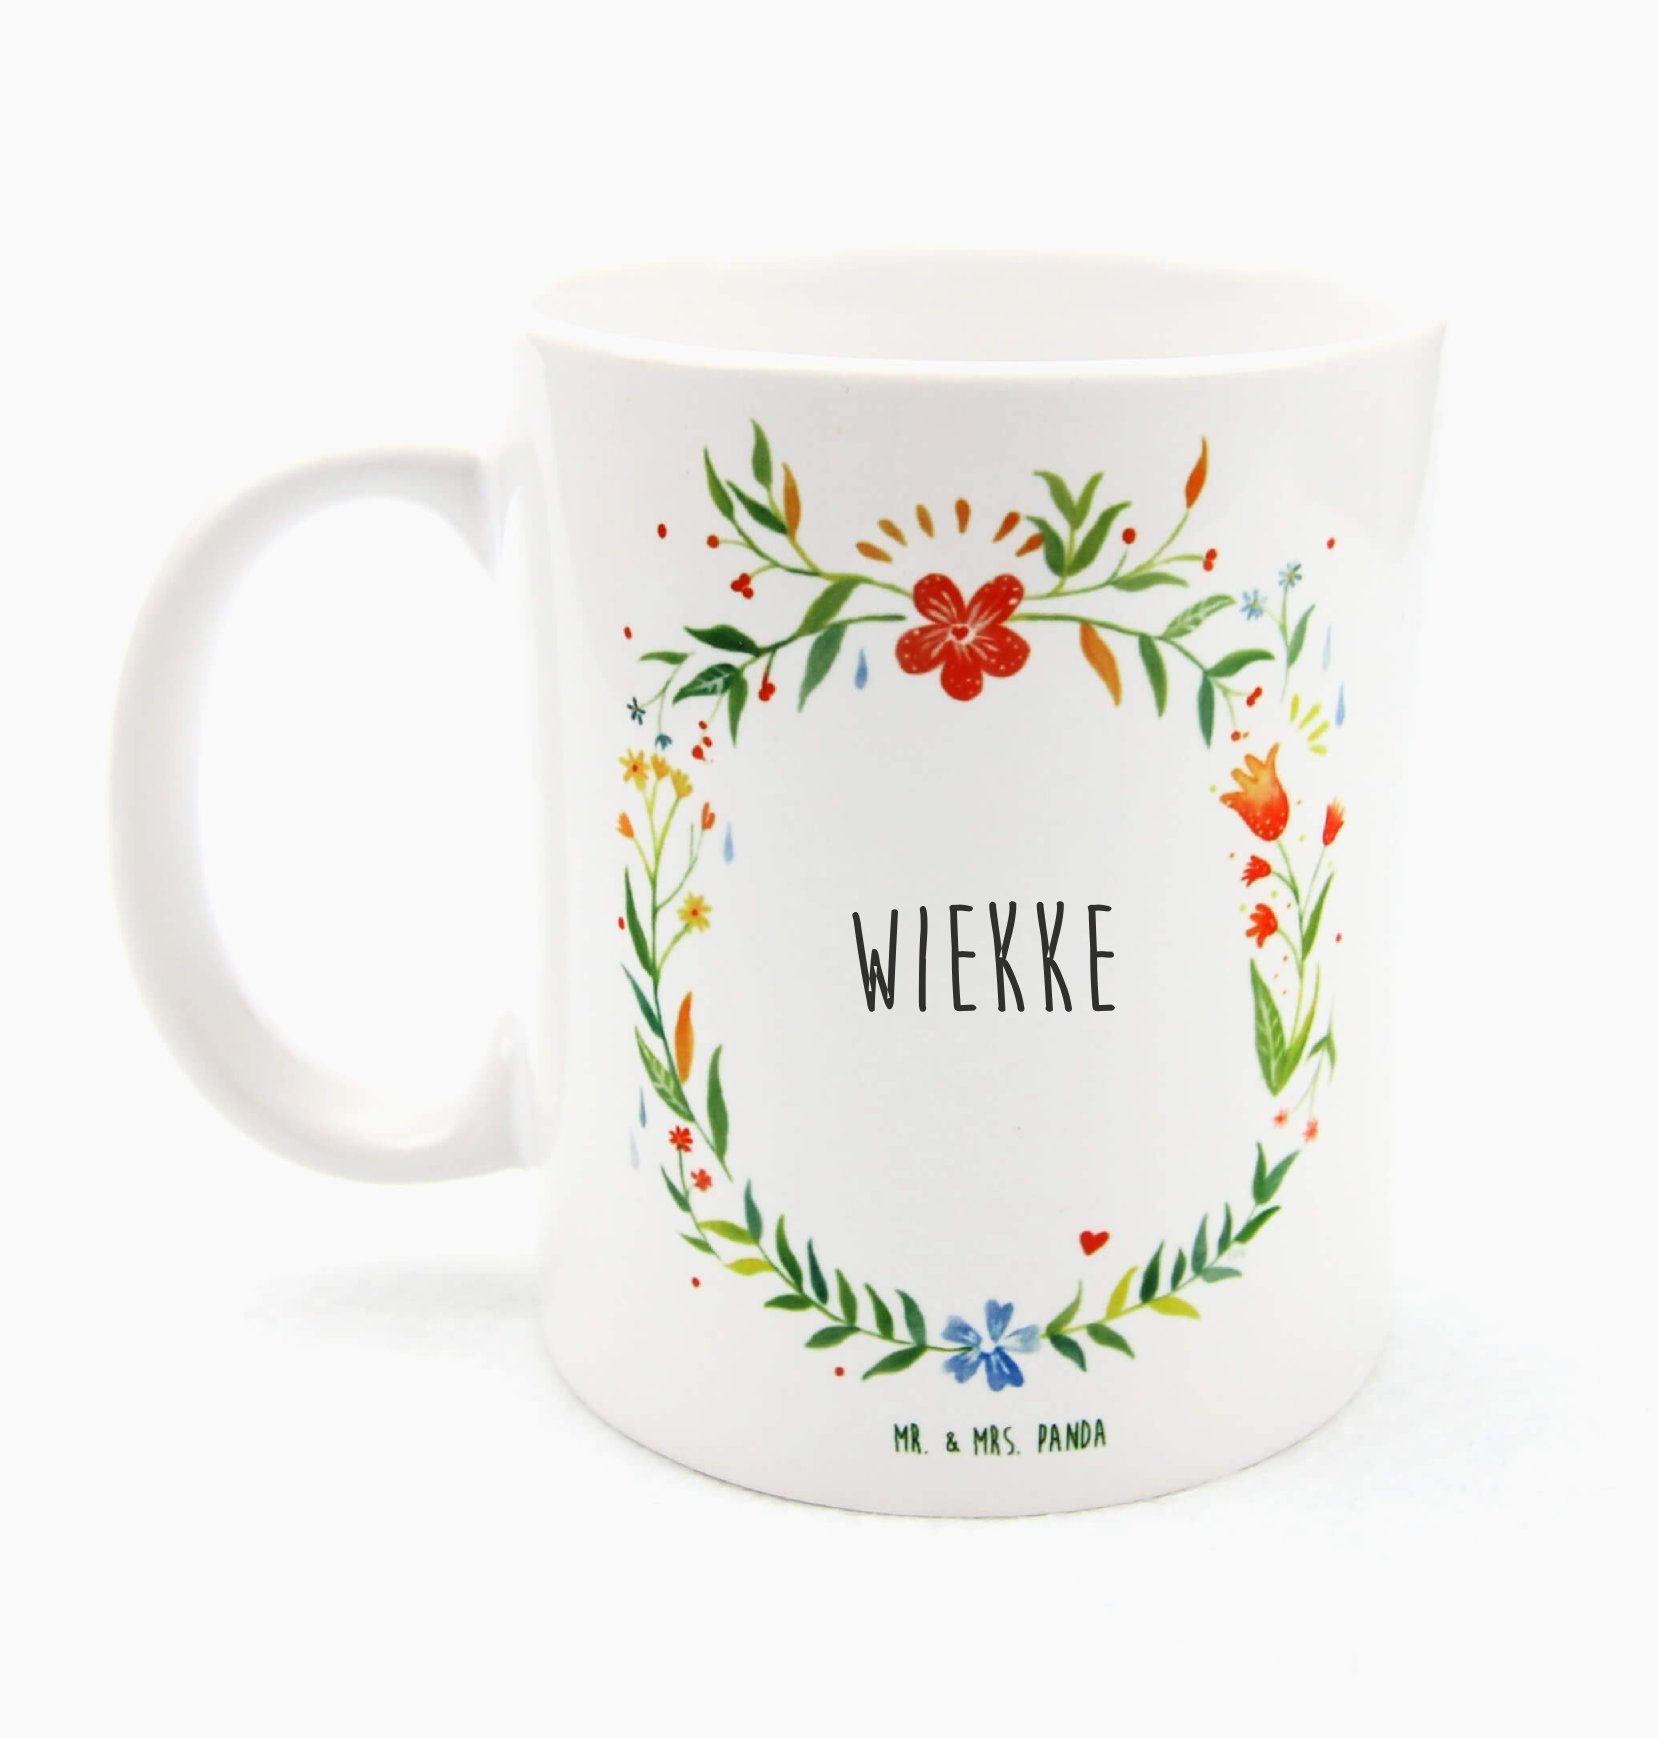 Panda - Teetasse, Mrs. & Kaffeetasse, Mr. Wiekke Sprüche, Gesc, Keramik Tasse Tasse Geschenk, Becher,